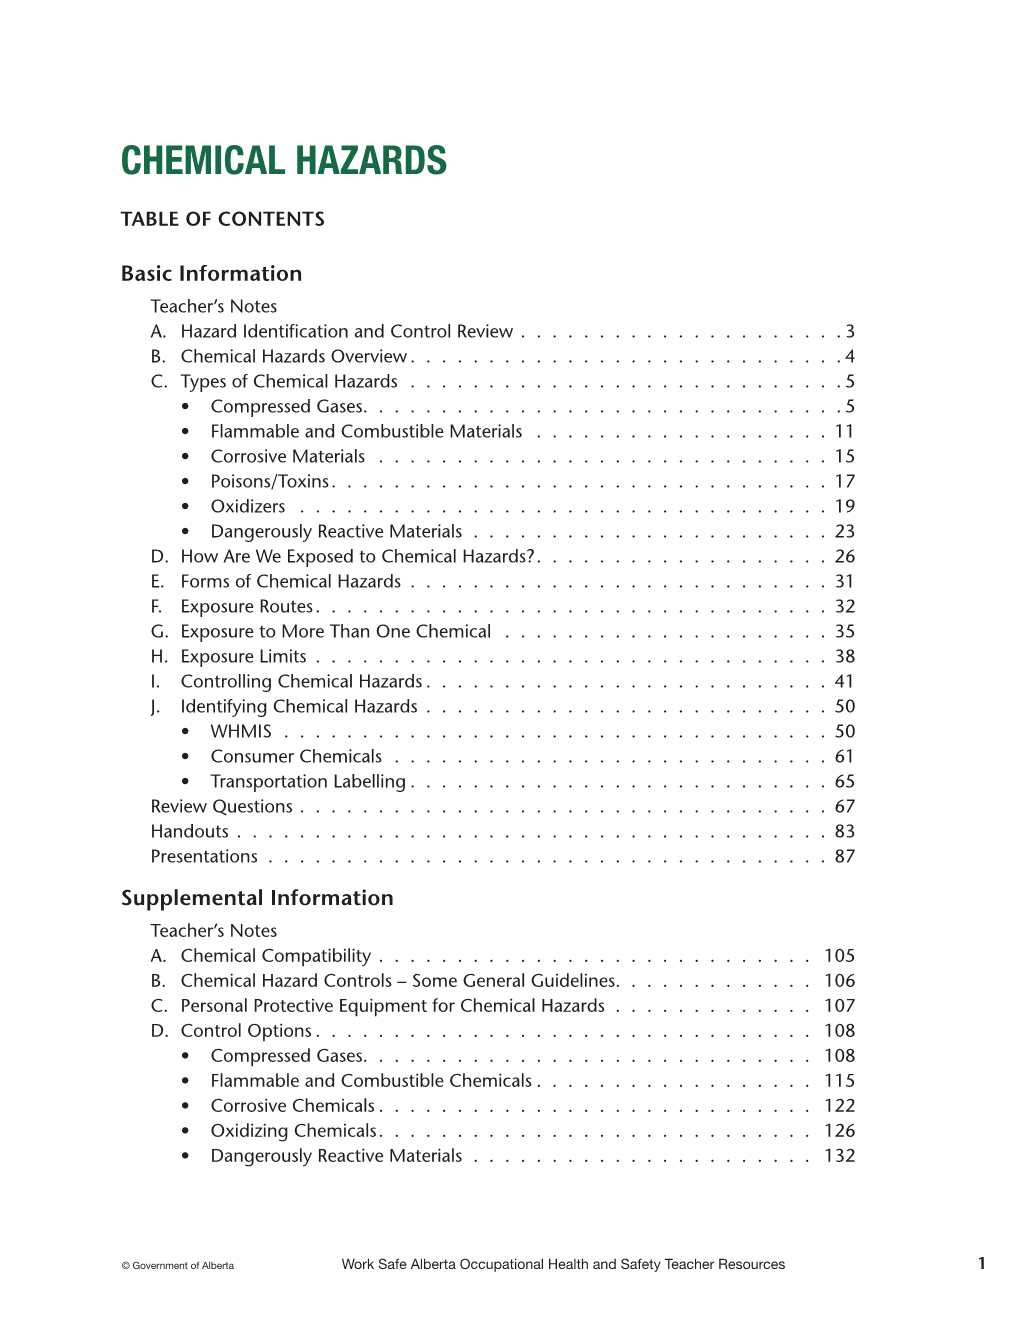 OHS Teacher Resource Binder: Chapter 5 Chemical Hazards